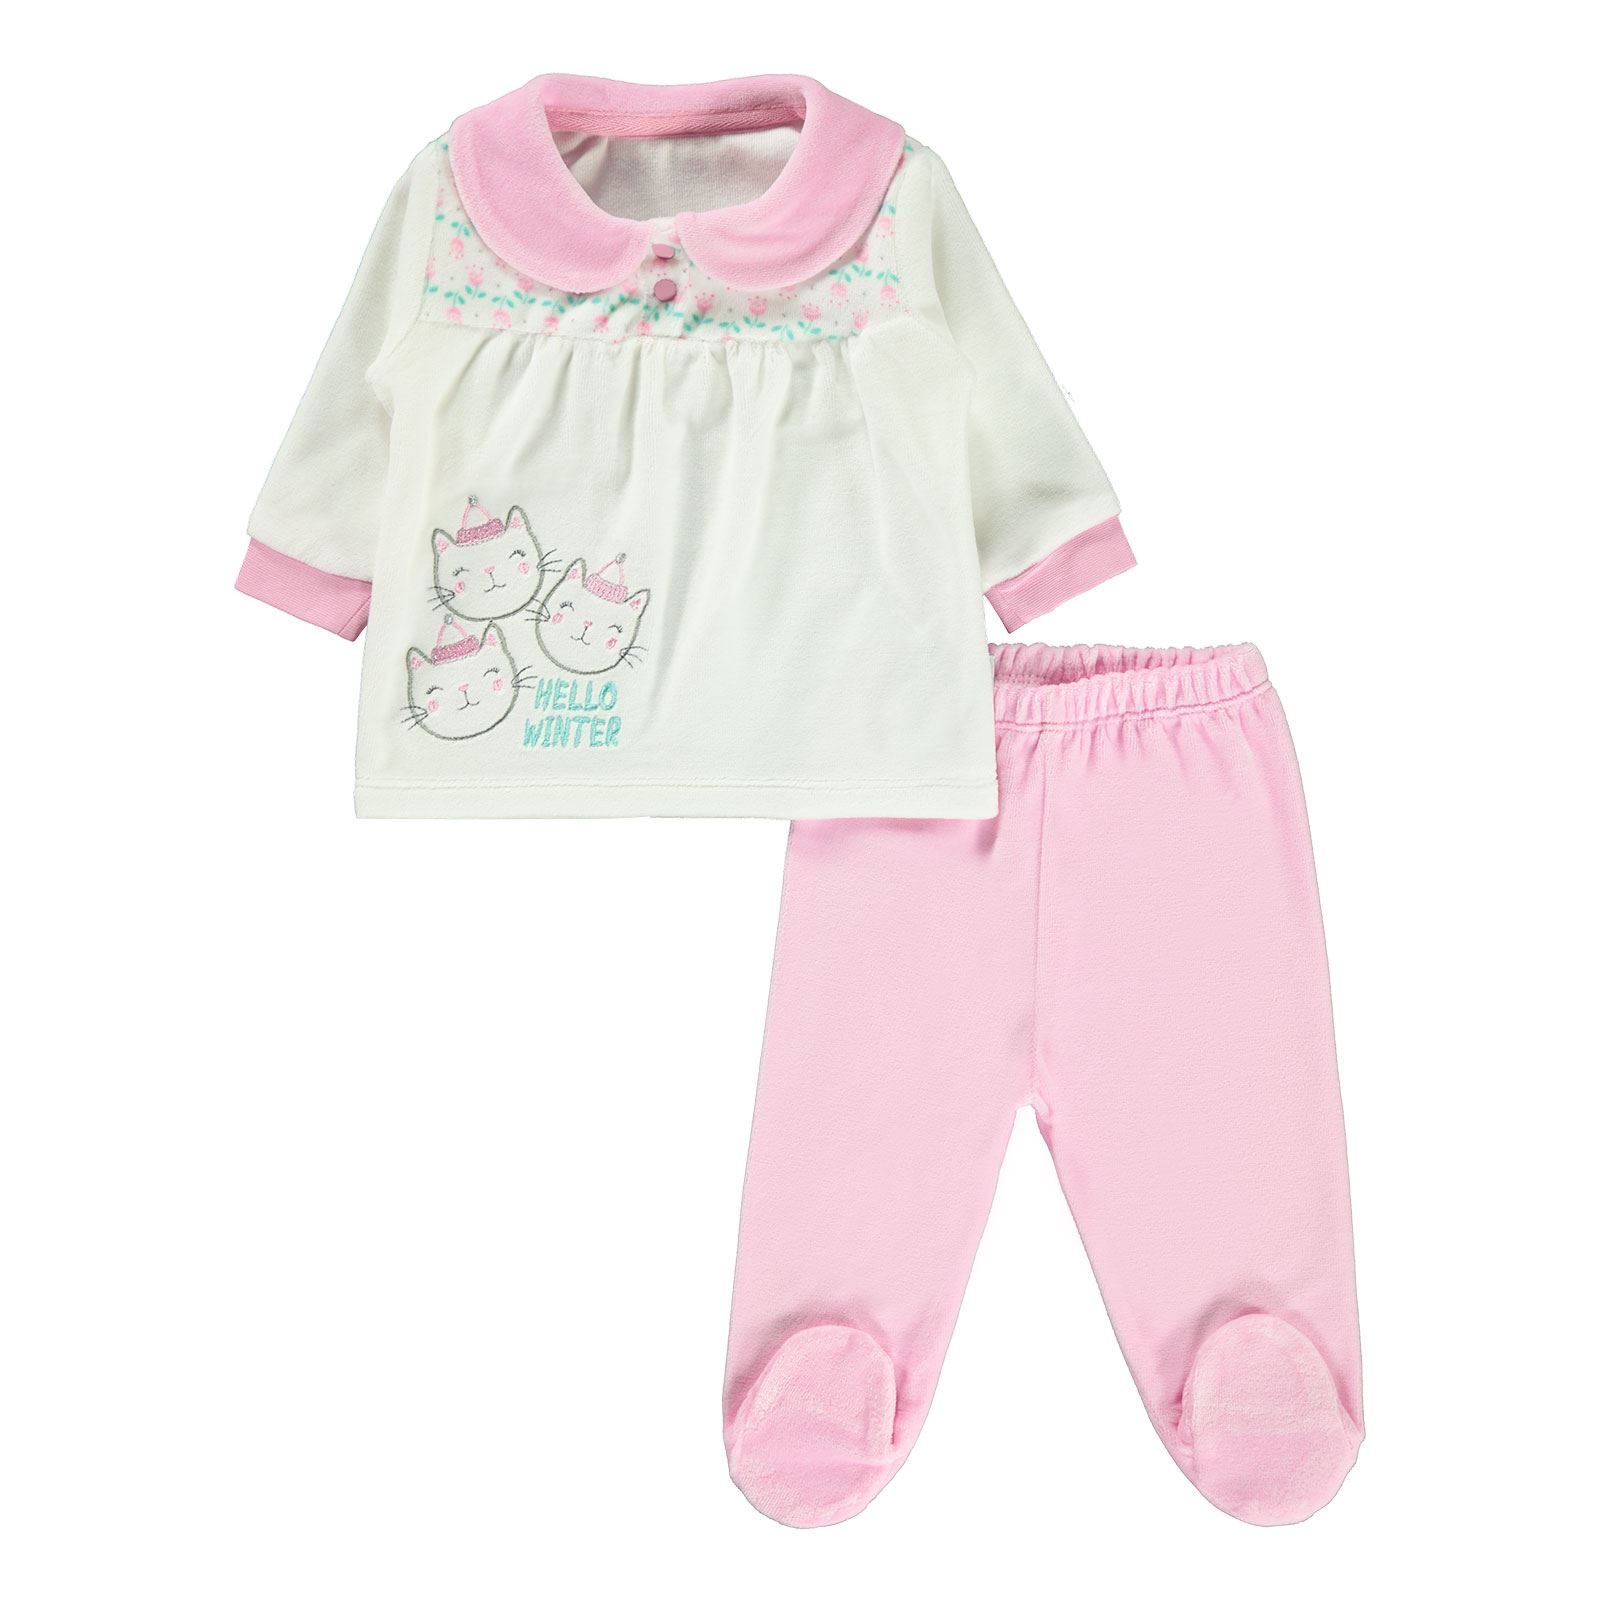 Kujju Kız Bebek Pijama Takımı 36 Ay Pembe Fiyatı B740 / PMB